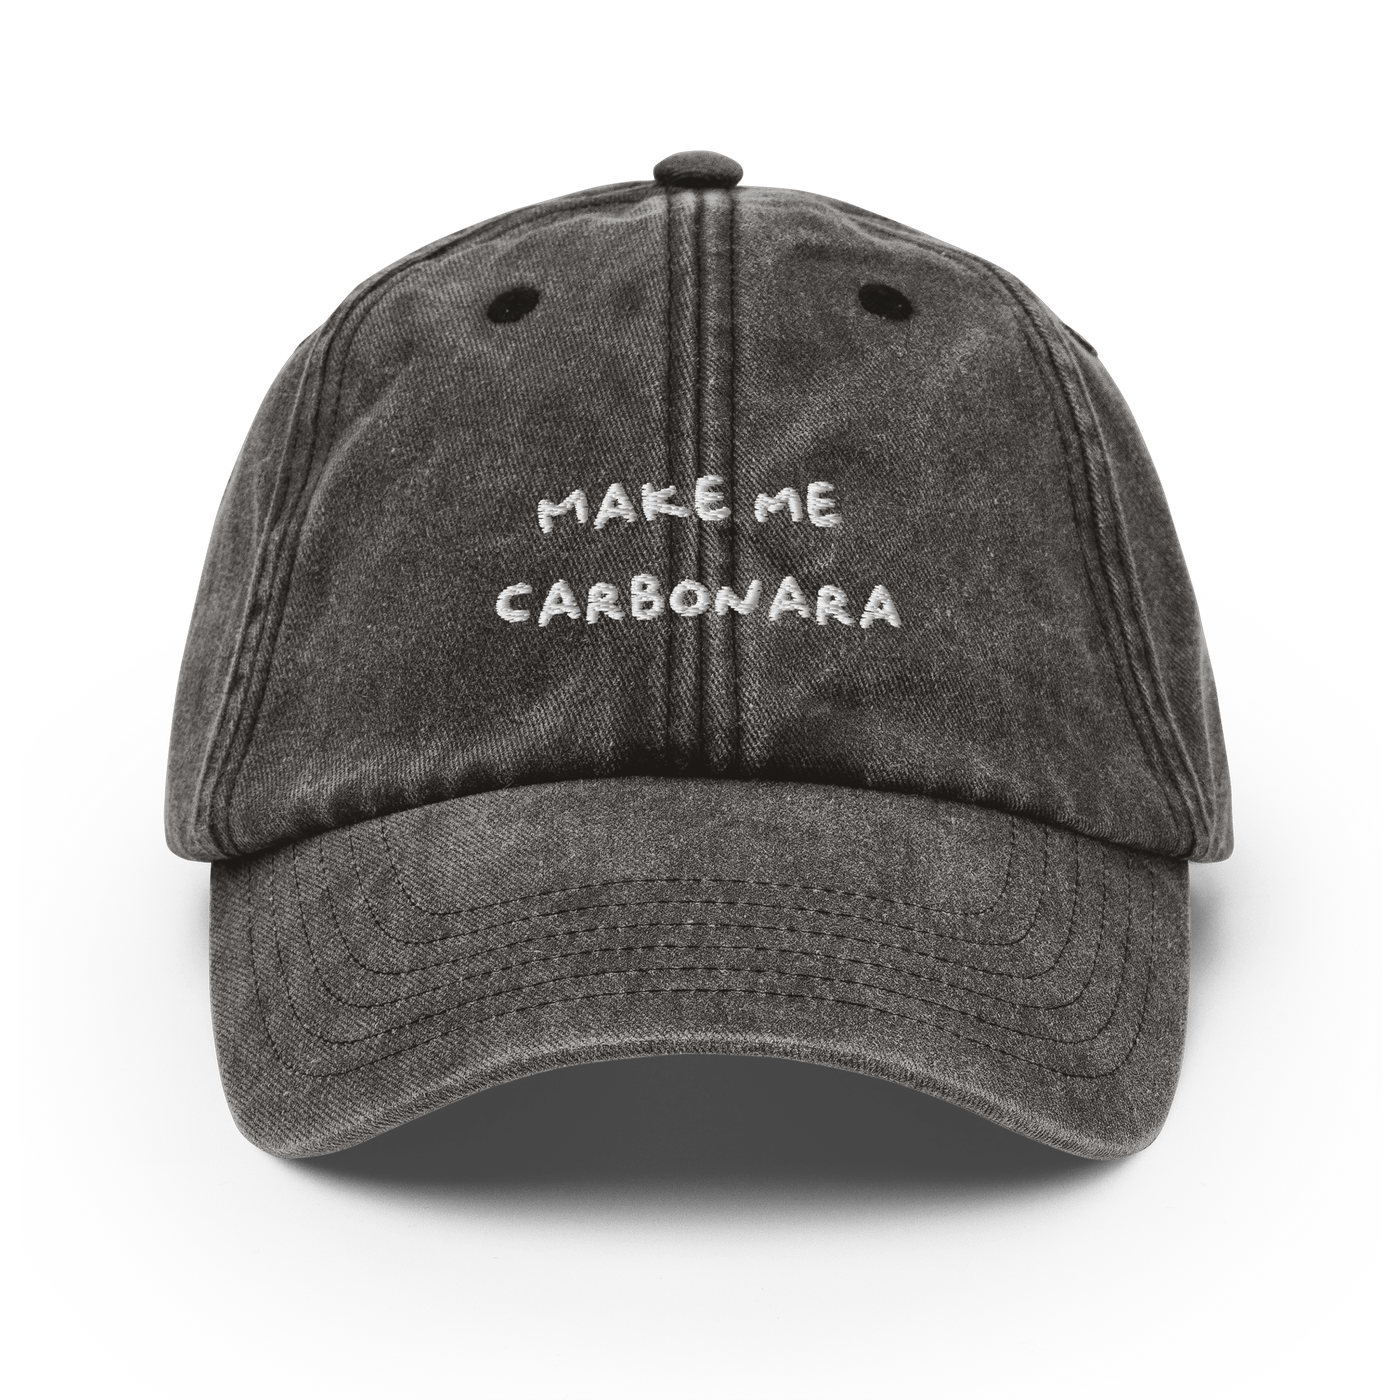 Make me Carbonara Vintage Hat - Vintage Black - - Just Another Cap Store